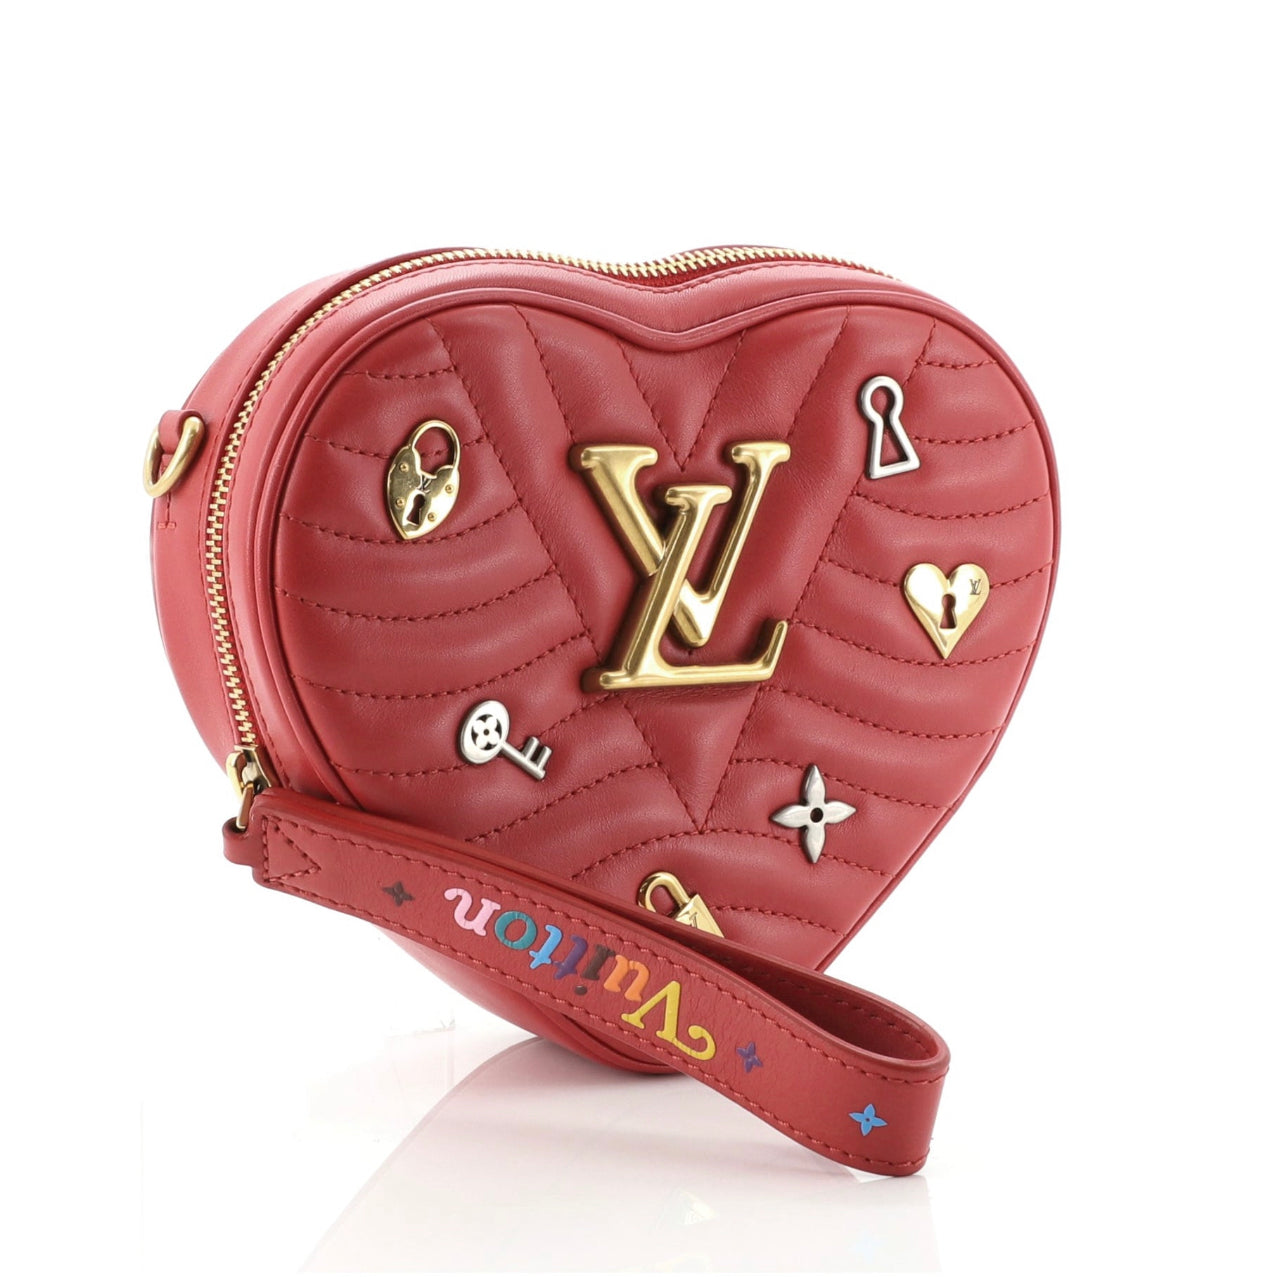 lv heart shaped bag